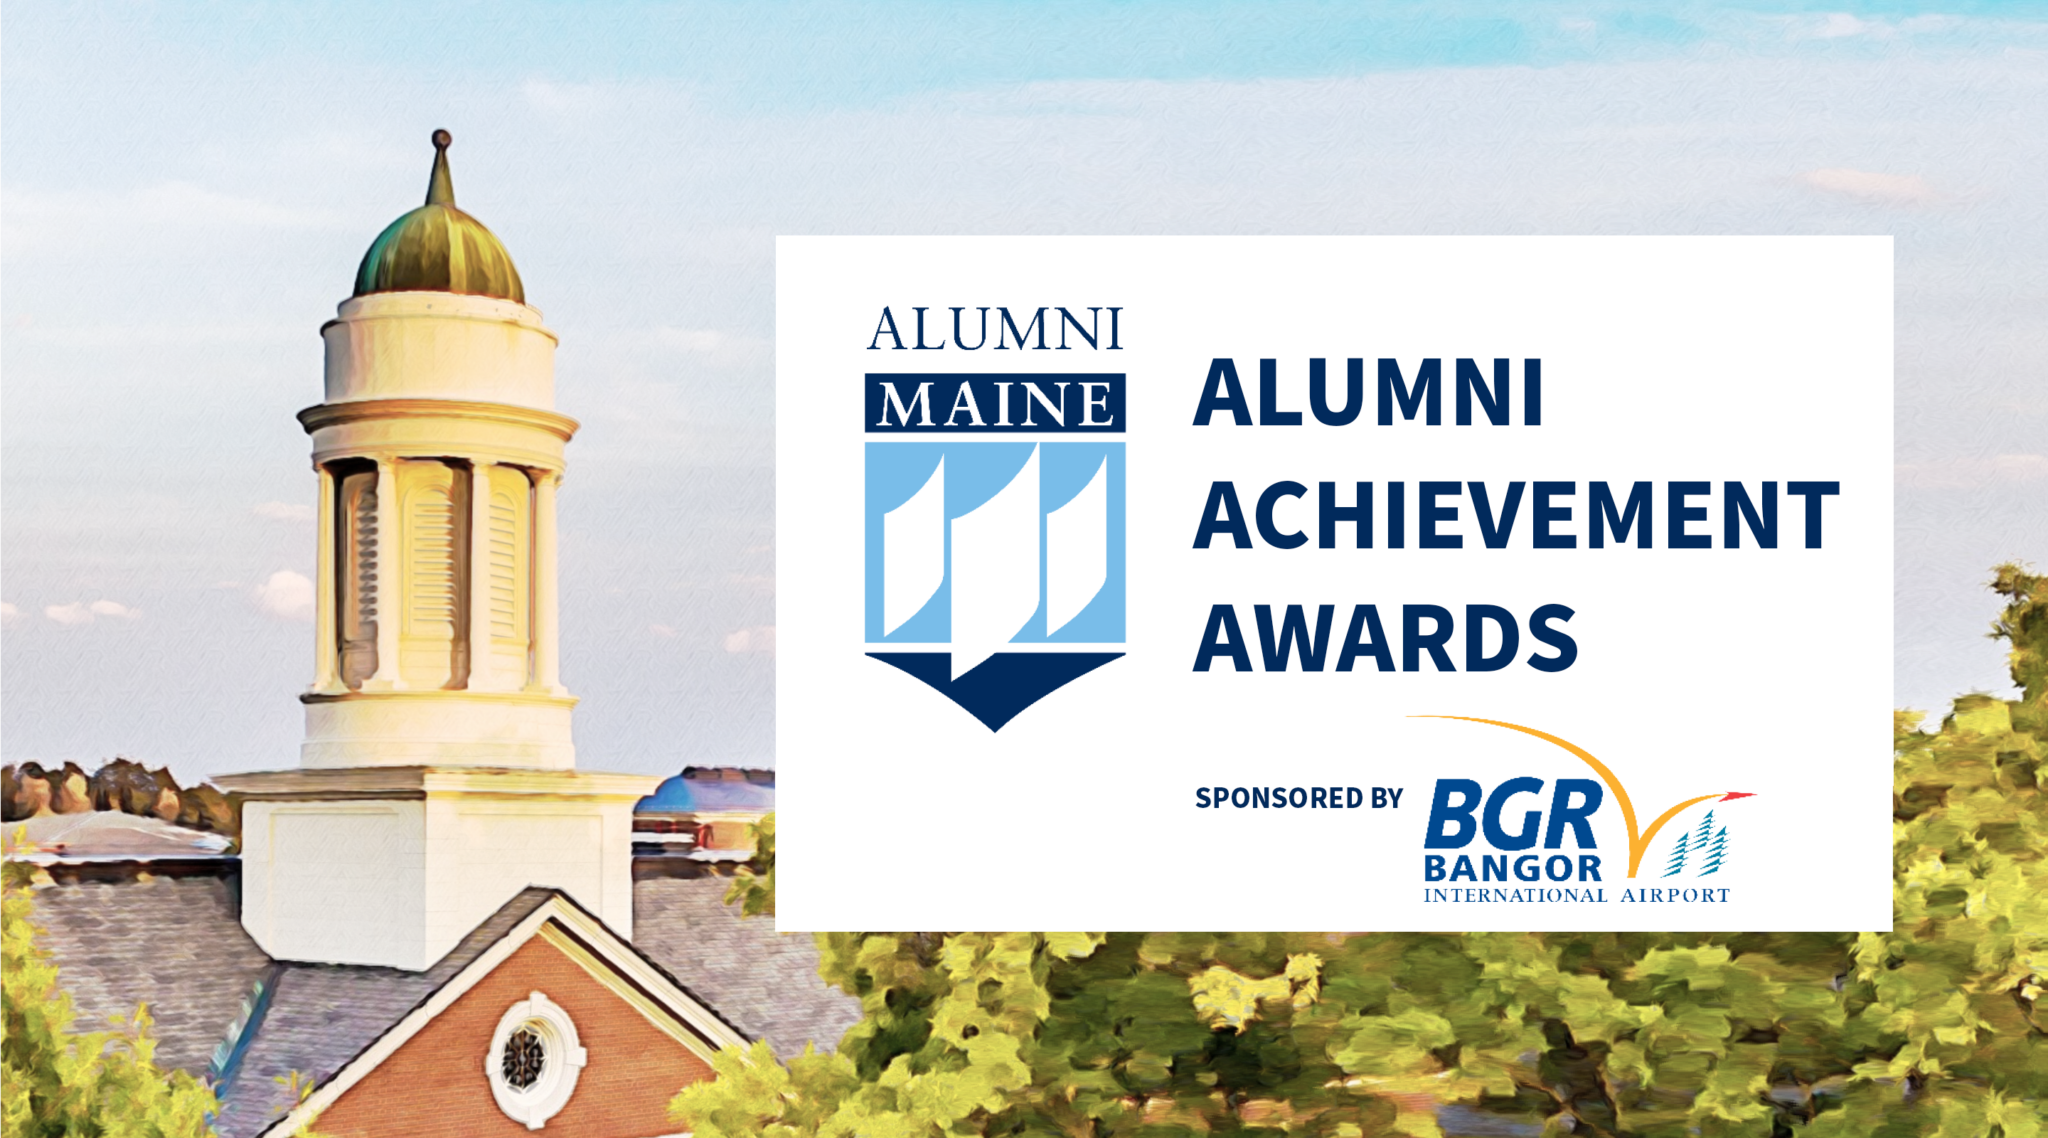 Alumni Achievement Awards, sponsored by Bangor International Airport